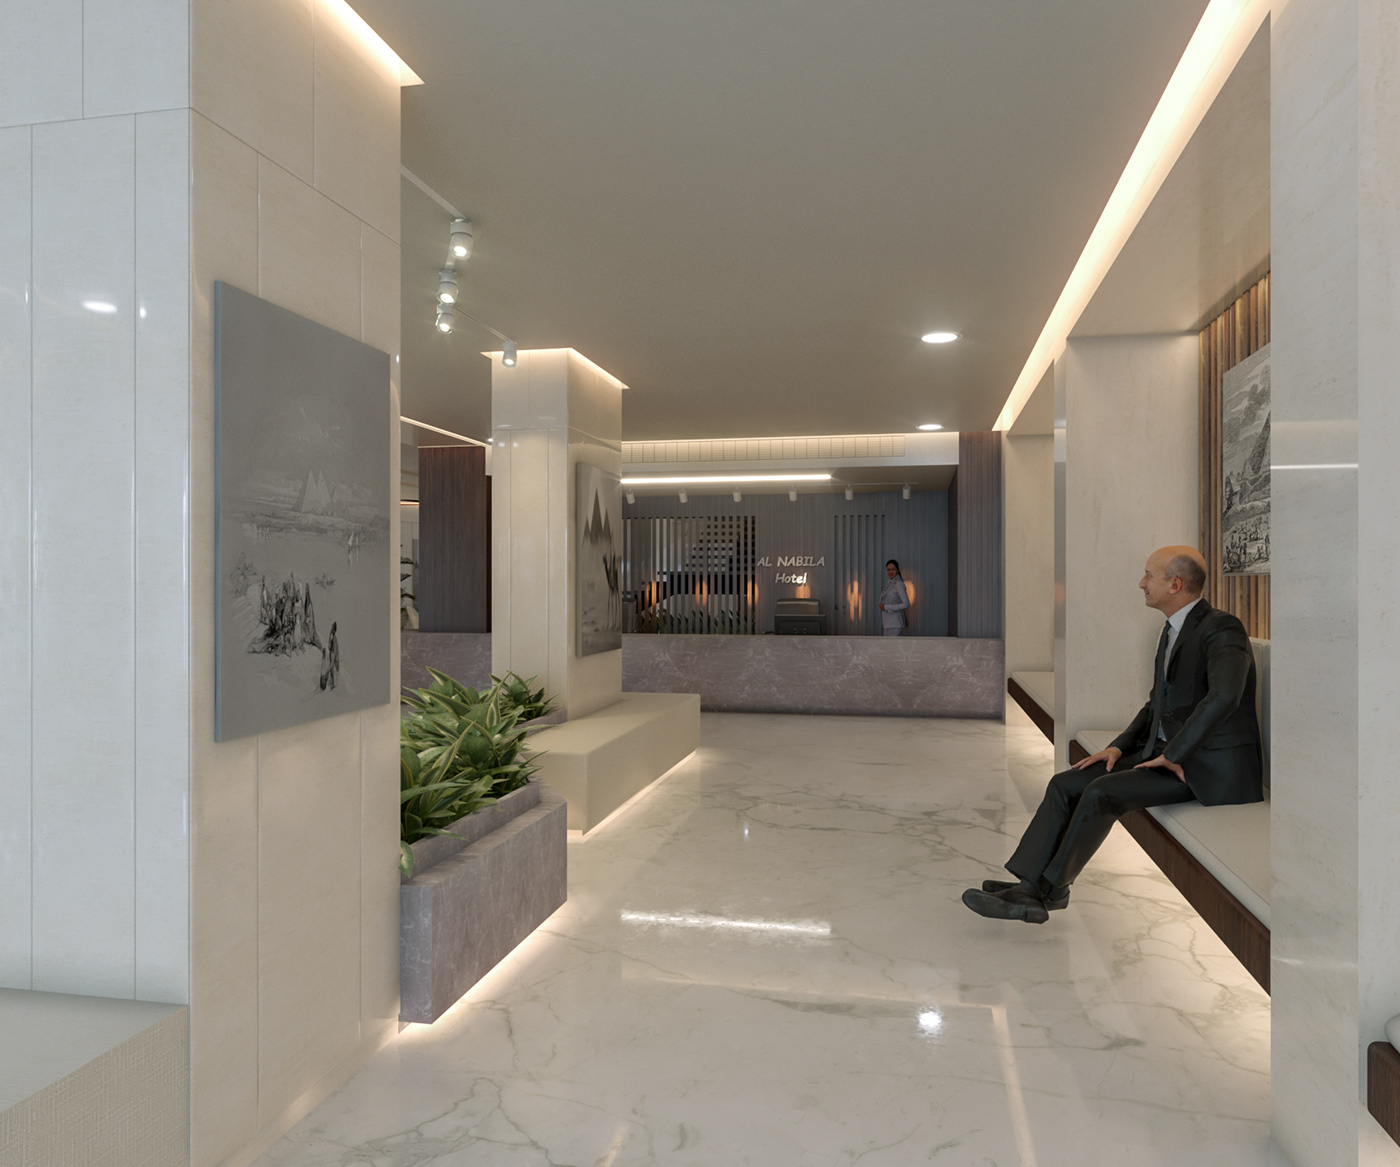 Eslam Hamed Interior architecture 3ds max visualization vray Render hotel reception interior design 